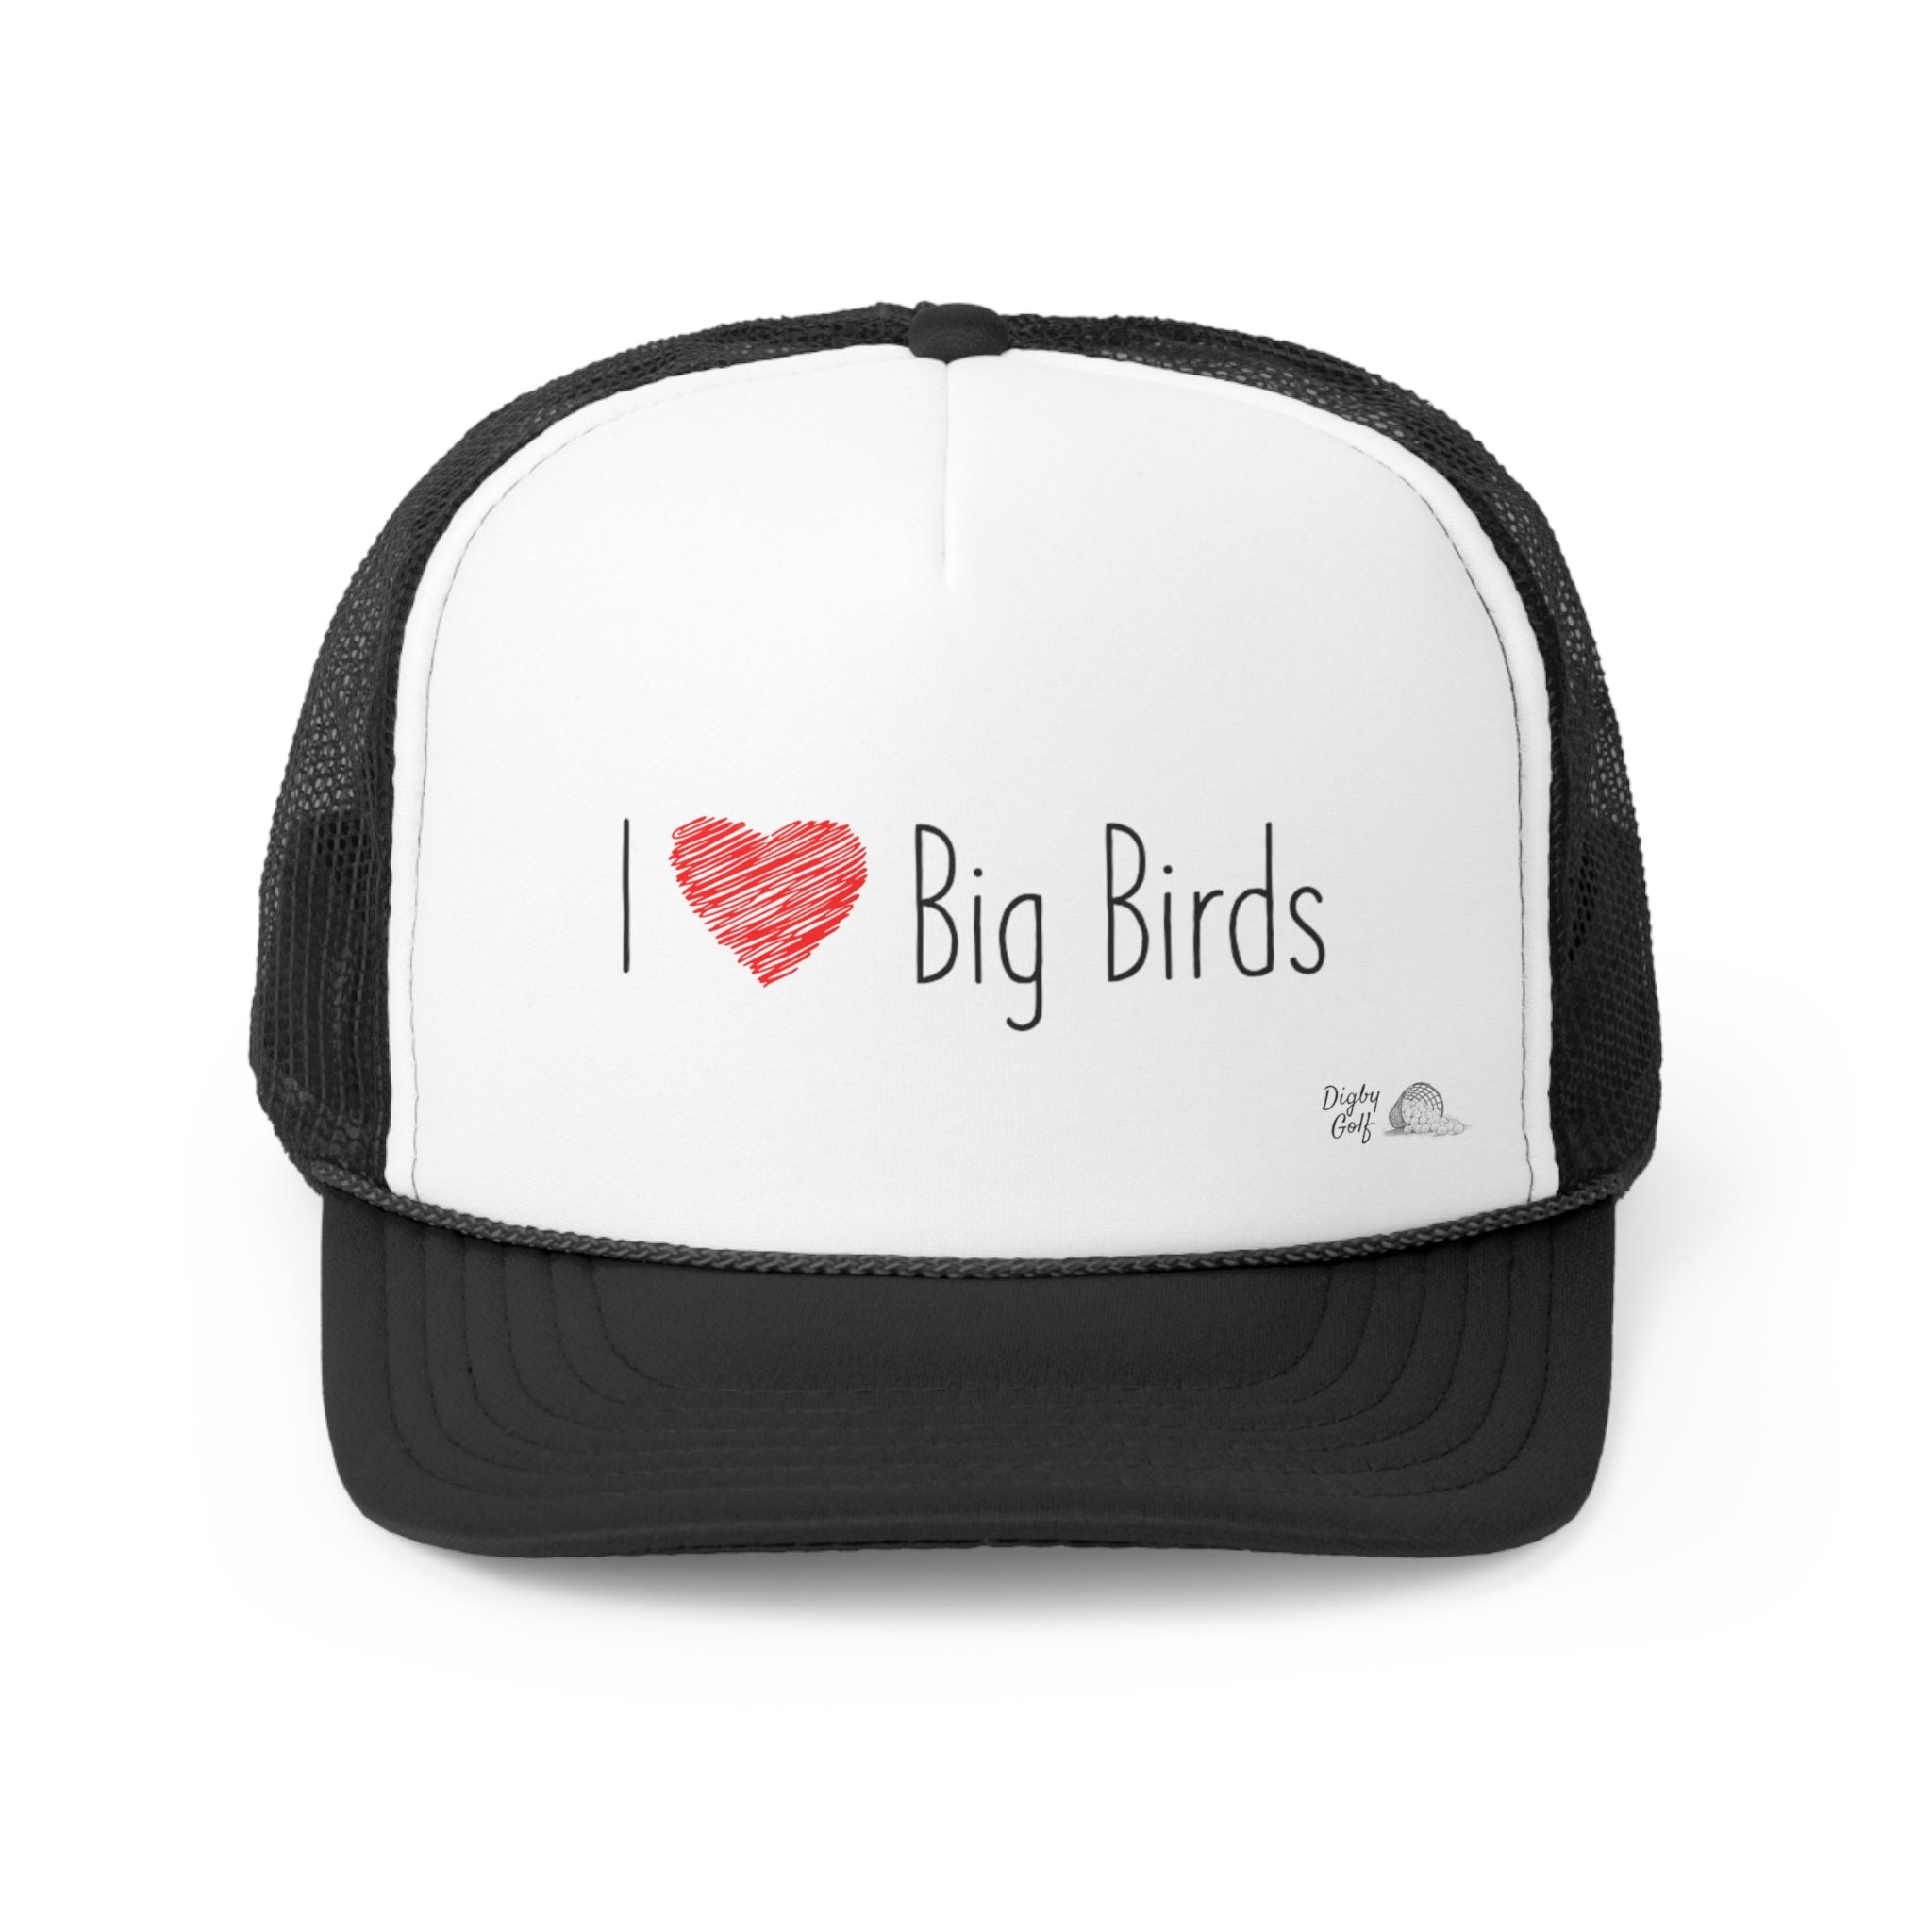 I Love Big Birds Digby Golf Trucker Caps